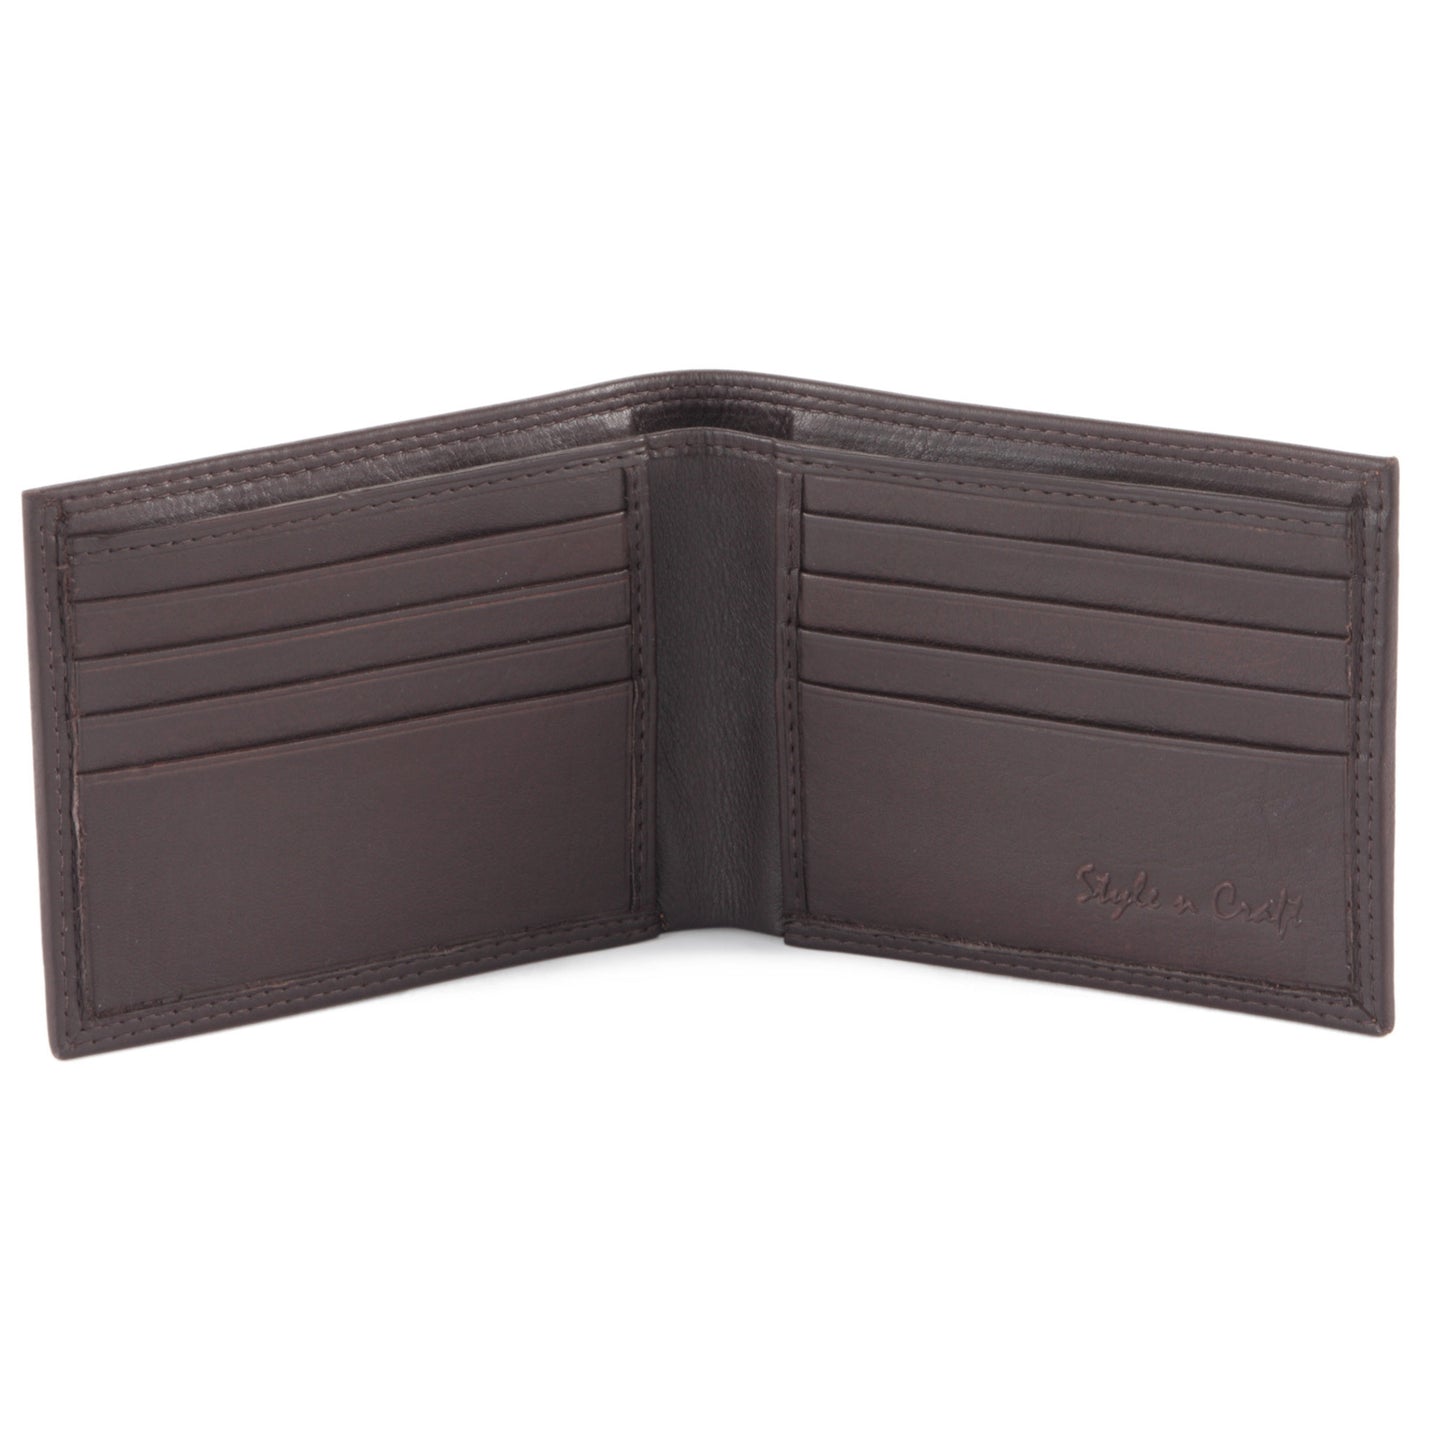 Style n Craft 300720-BR Slim bi-fold wallet in brown top grain leather - open view